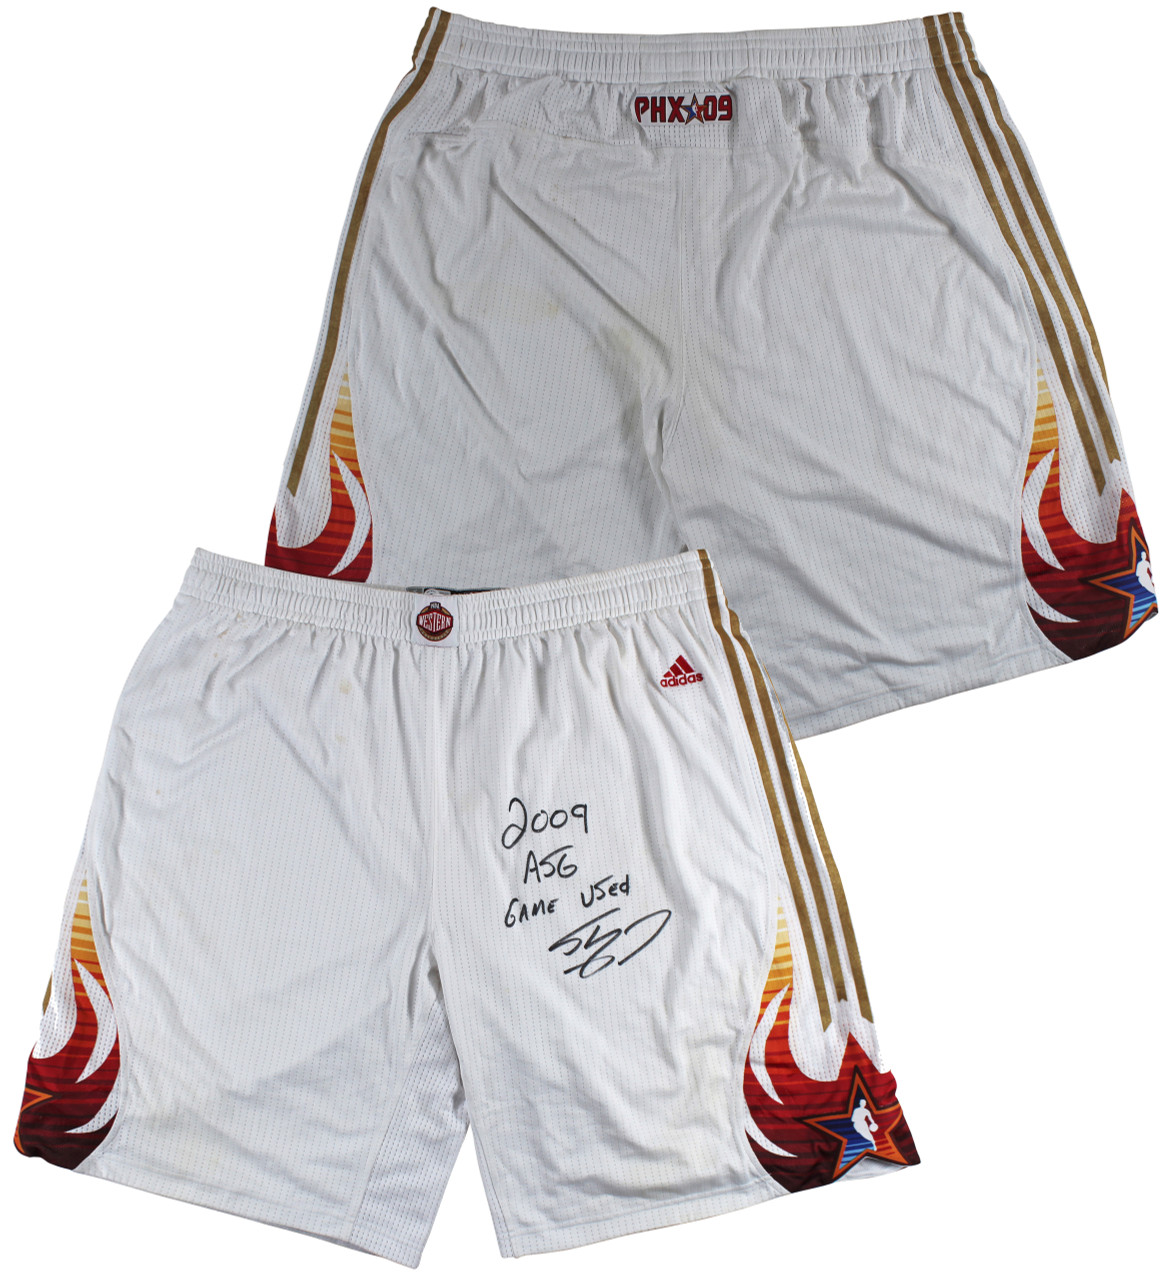 Adidas 2011 Kobe Bryant NBA West All Star Jersey Mens Size Medium +2” Length